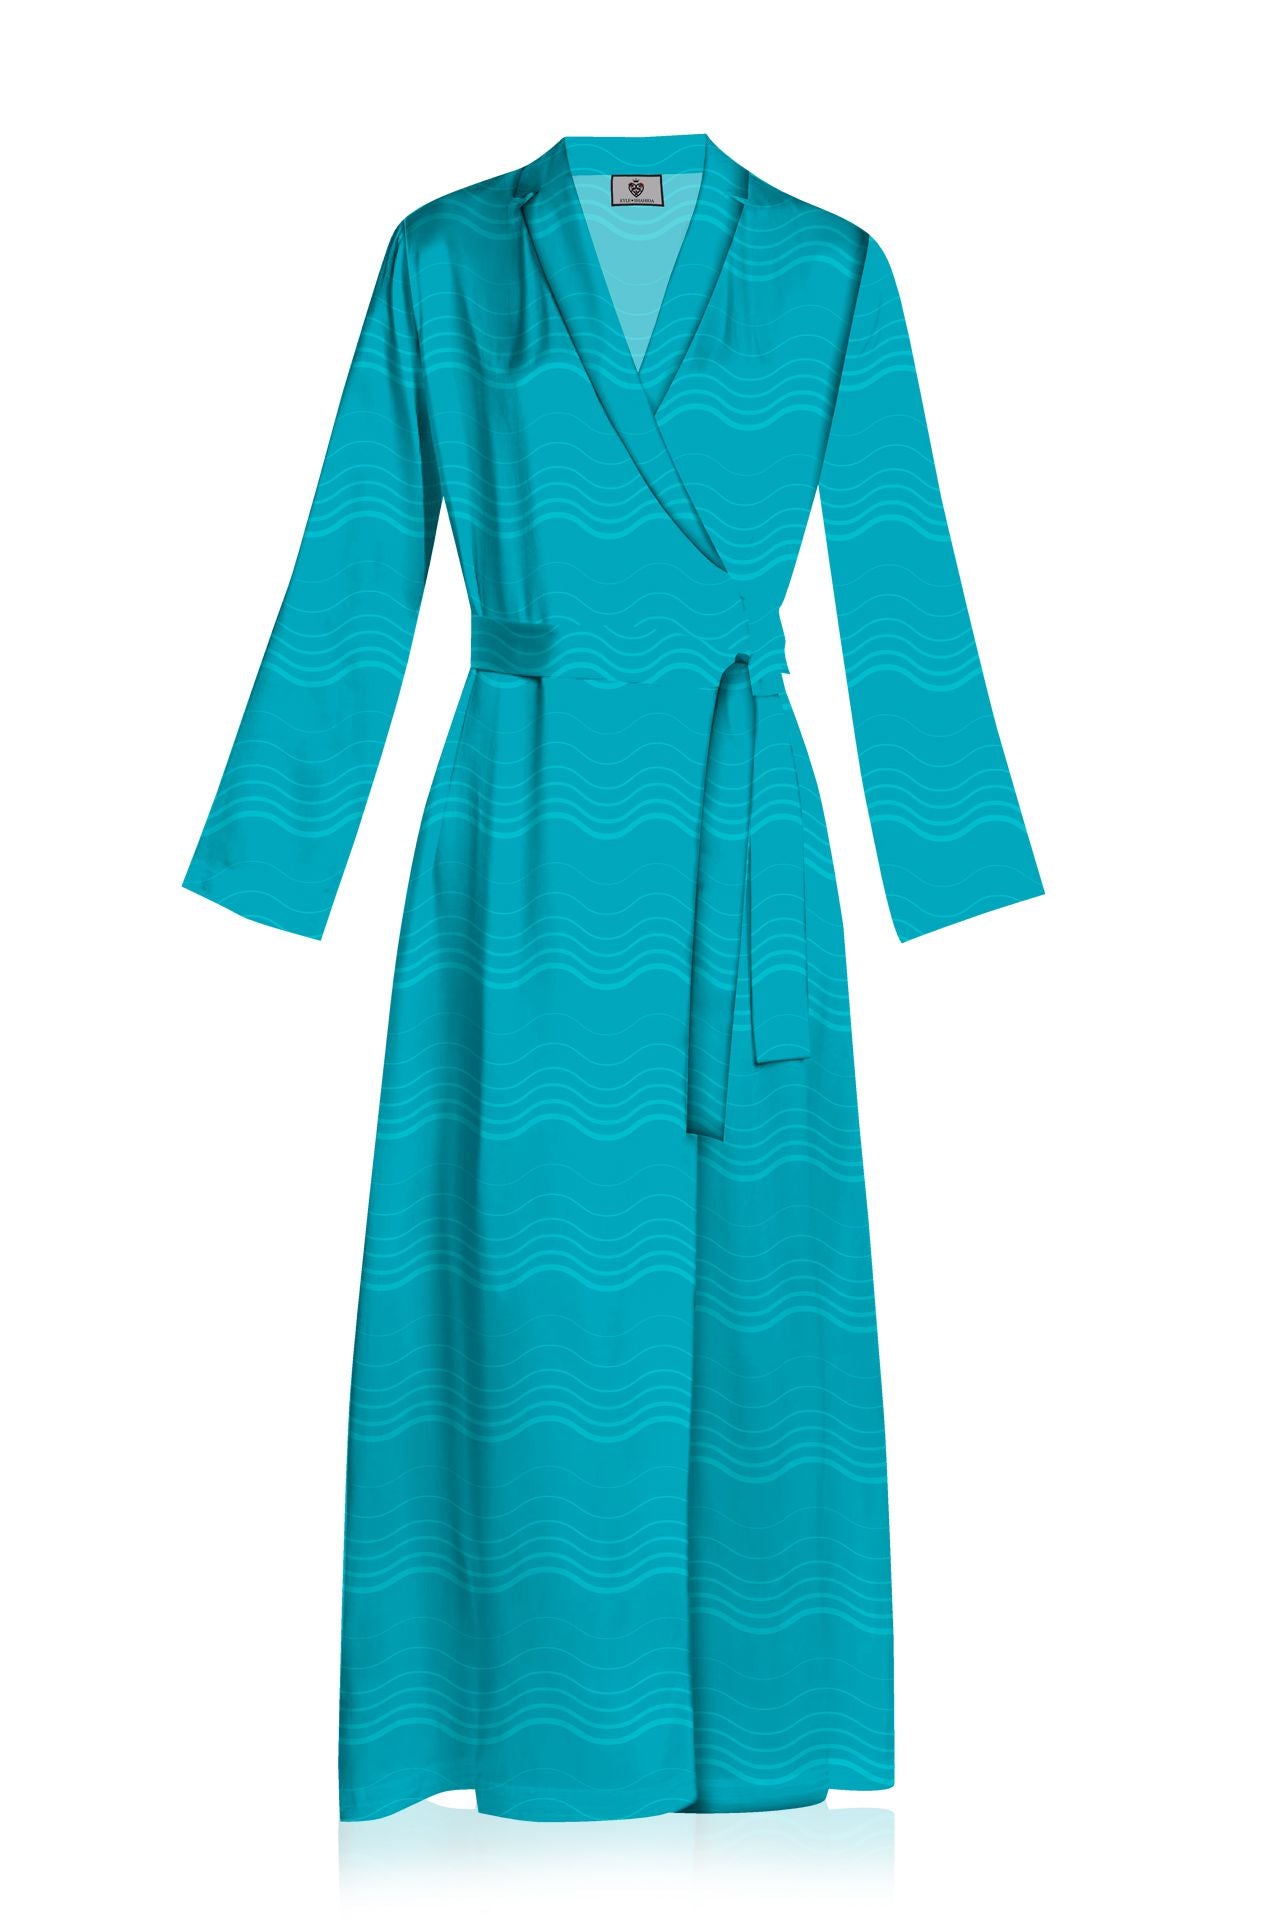 "blue wrap maxi dress" "Kyle X Shahida" "maxi plus size wrap dress" "long silk wrap dress"